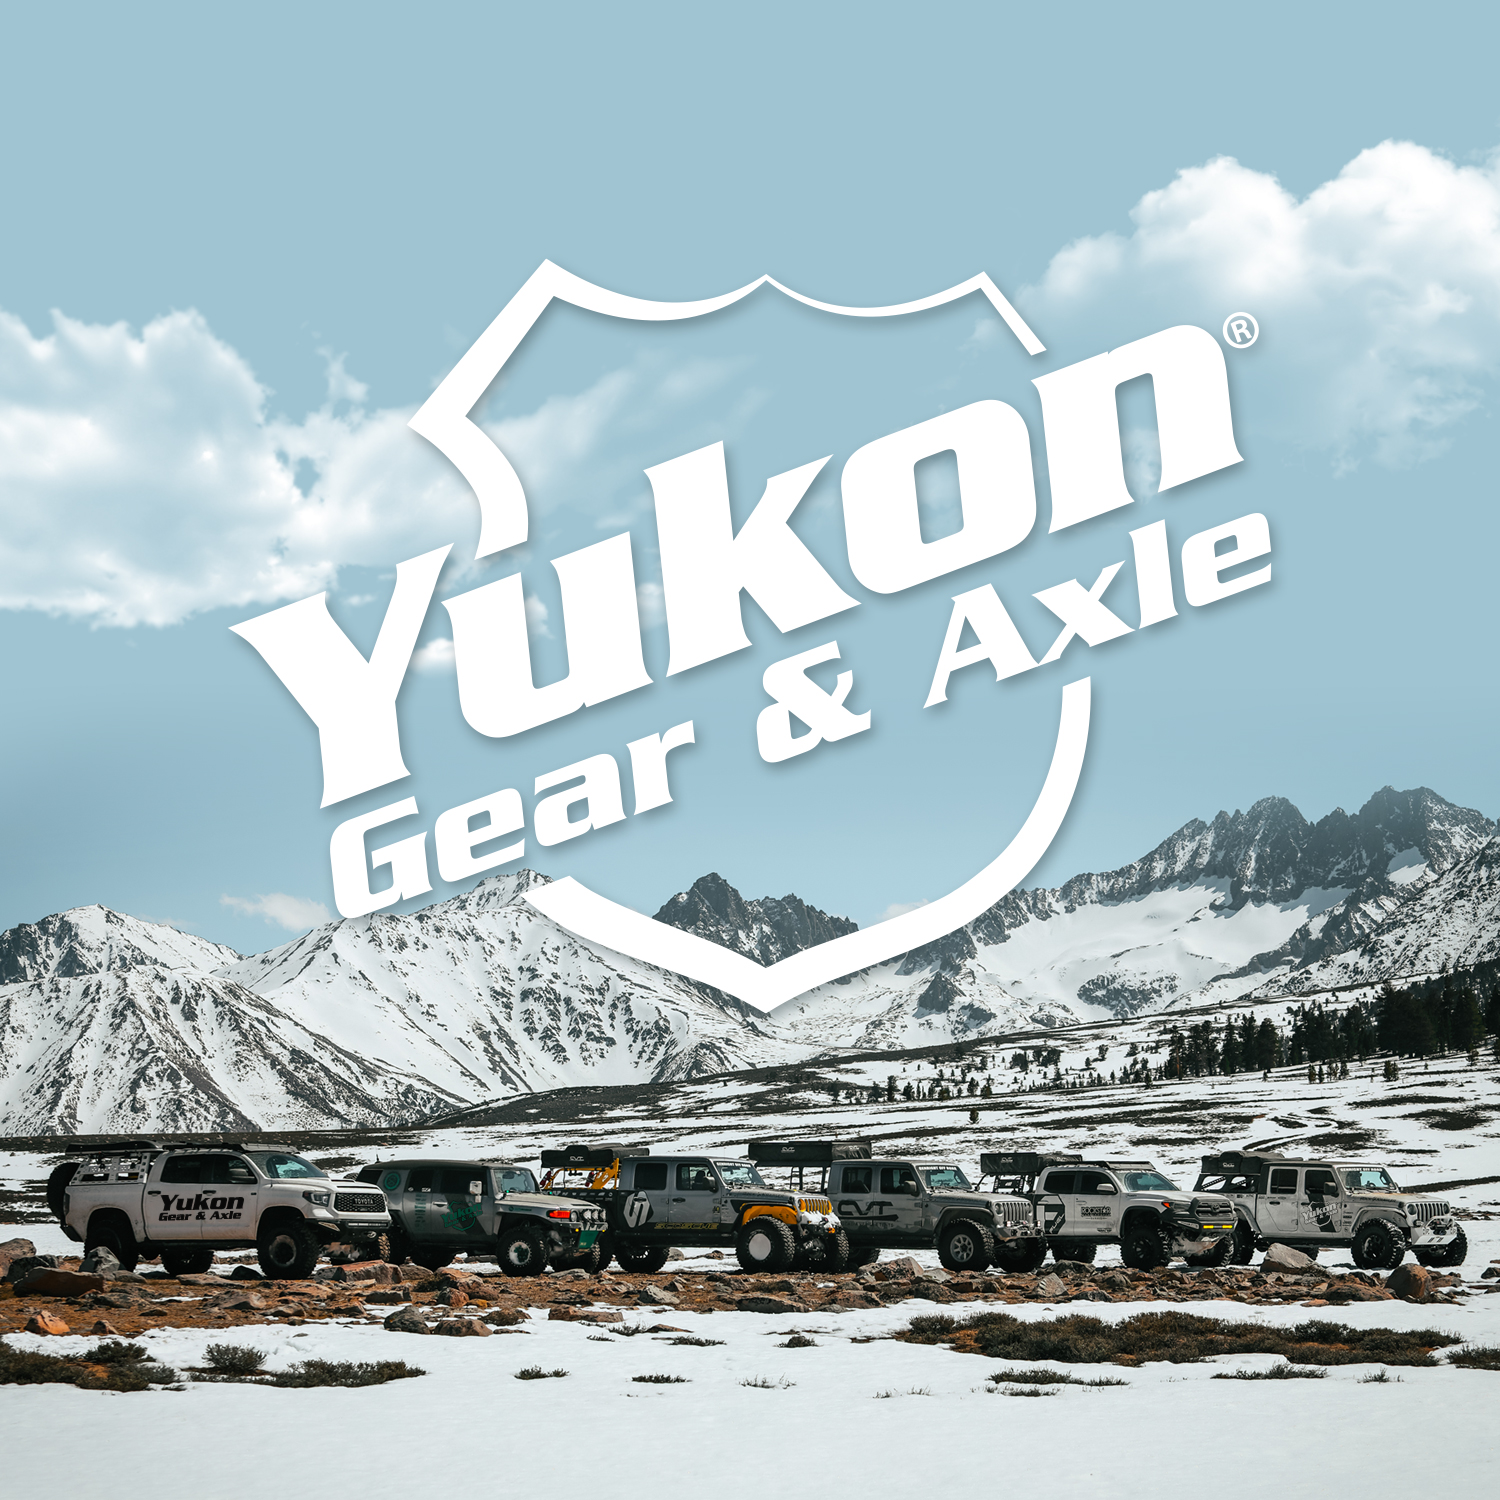 Yukon high performance replacement ring & pinion gear set, Dana 60, 4.30 ratio 